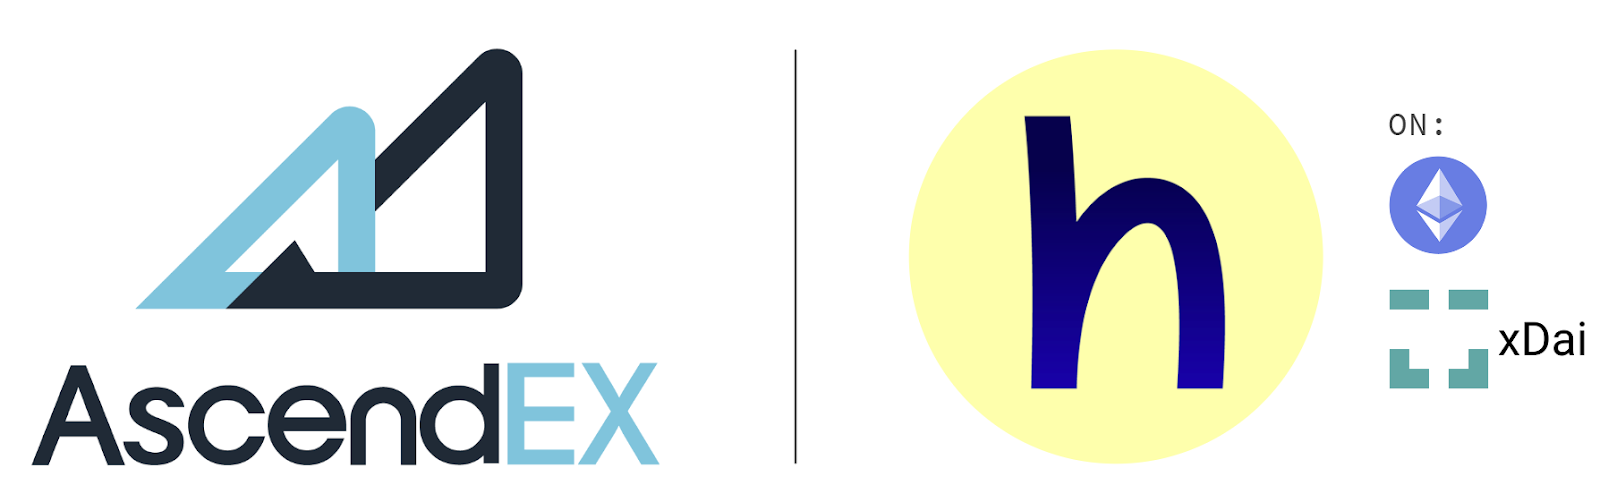 AscendEX 上线 HOPR 支持 ETH、xDai Plato 区块链数据智能。垂直搜索。人工智能。